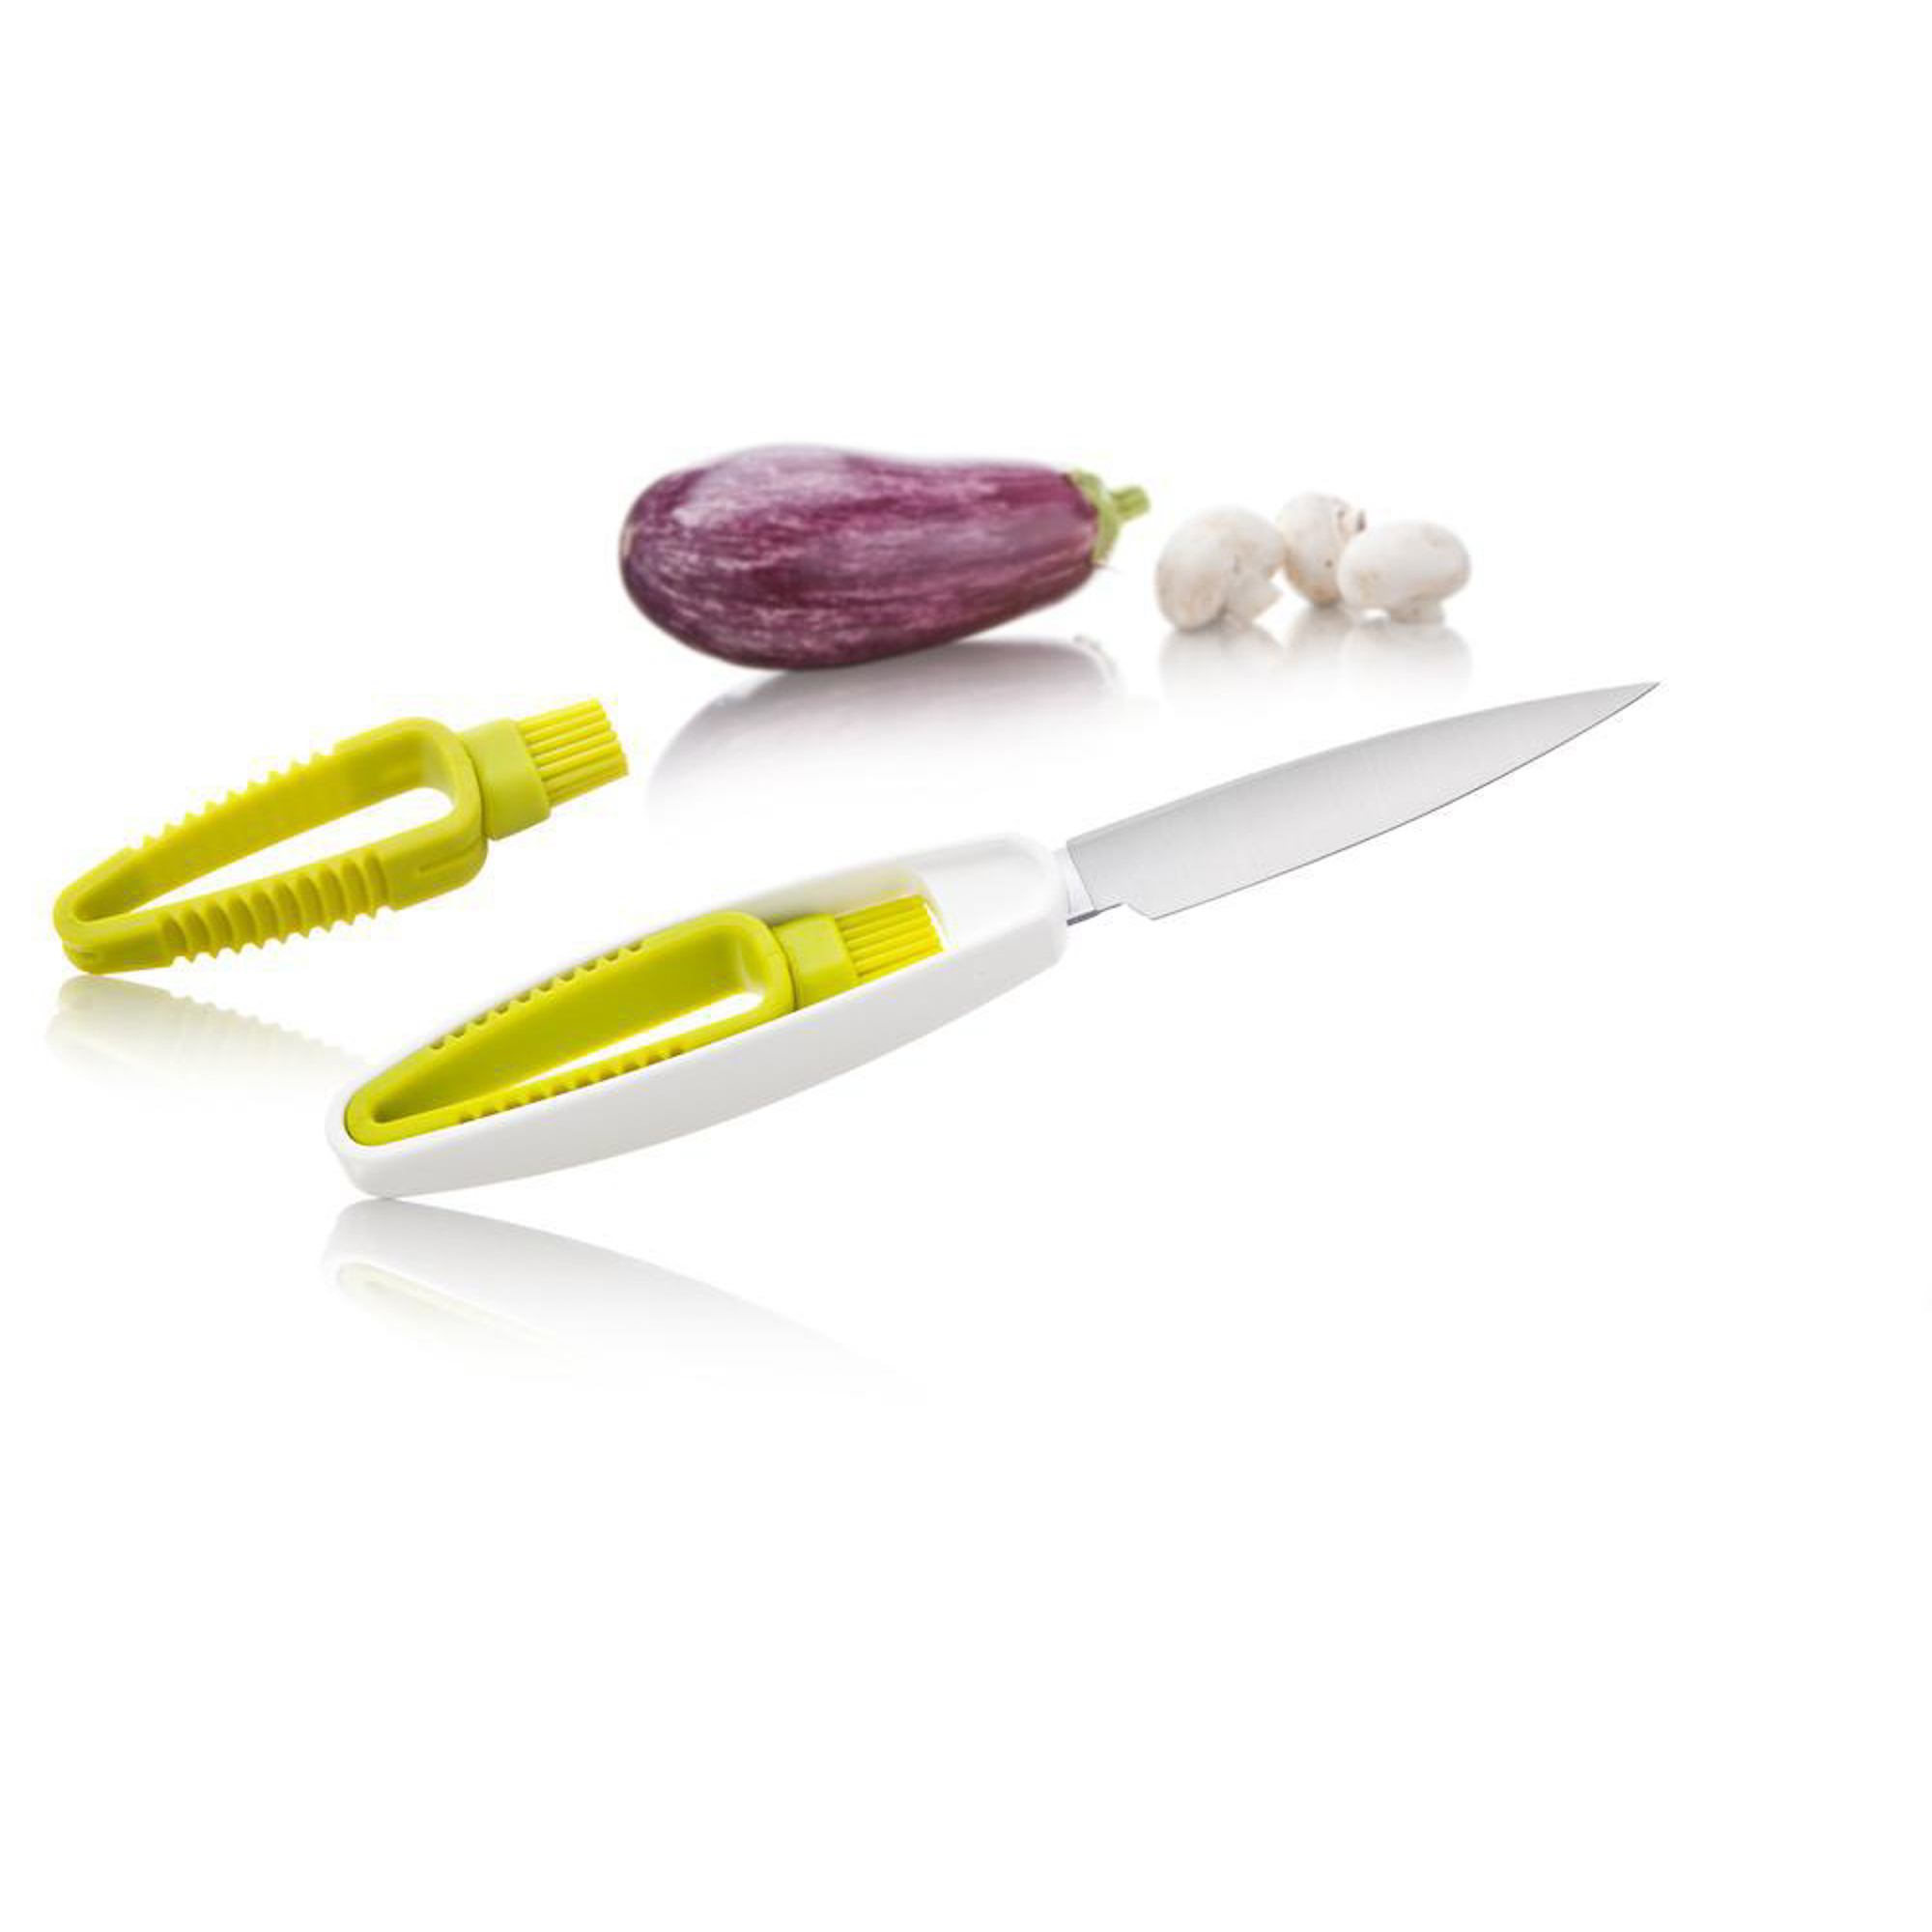 Нож для овощей со щеткой Tomorrow's kitchen нож ownland g 253 для очистки овощей в ассортименте